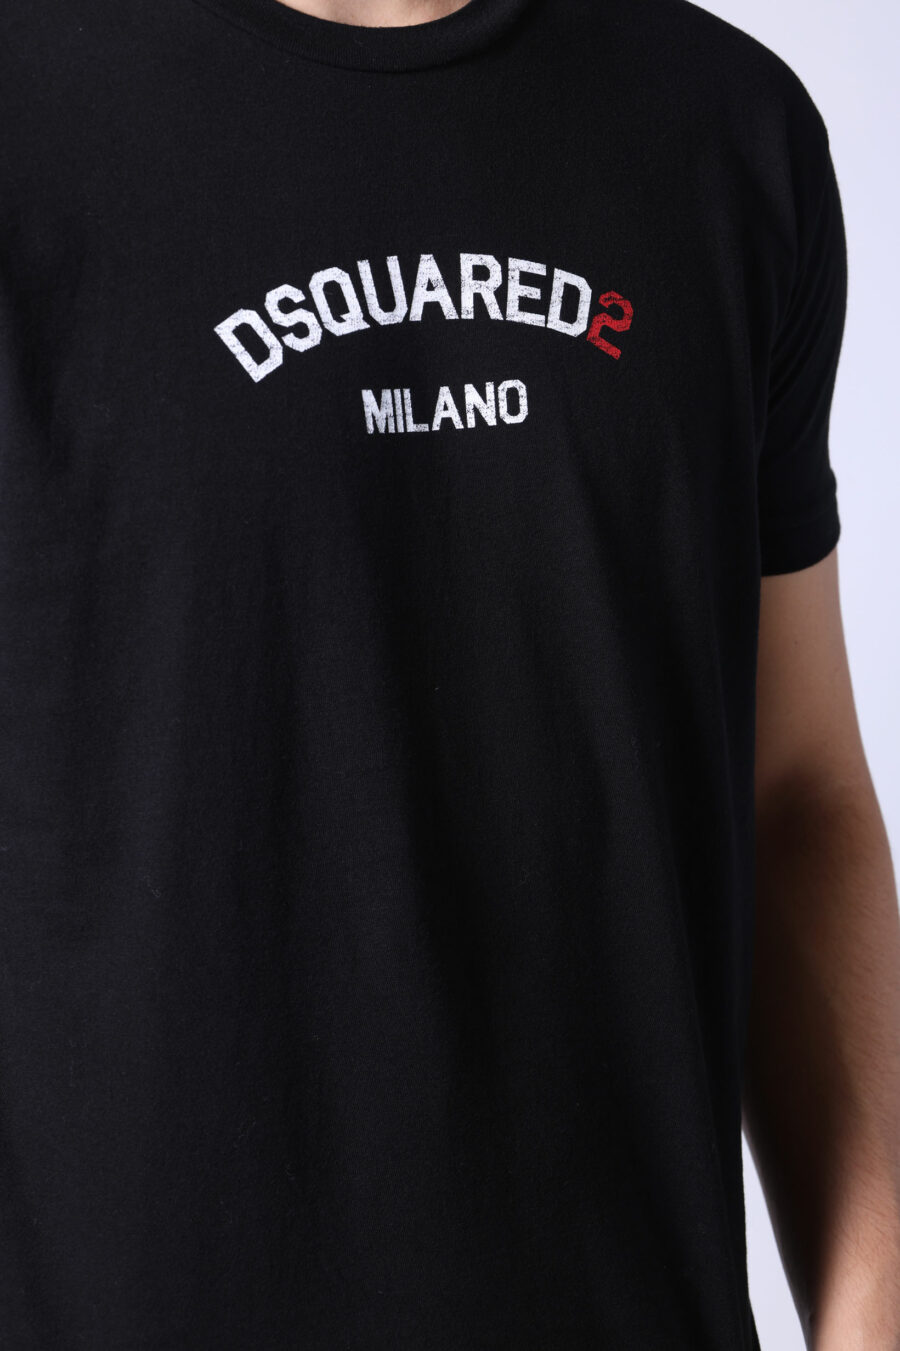 T-shirt preta com minilogo "dsquared2 milano" - Untitled Catalog 05473